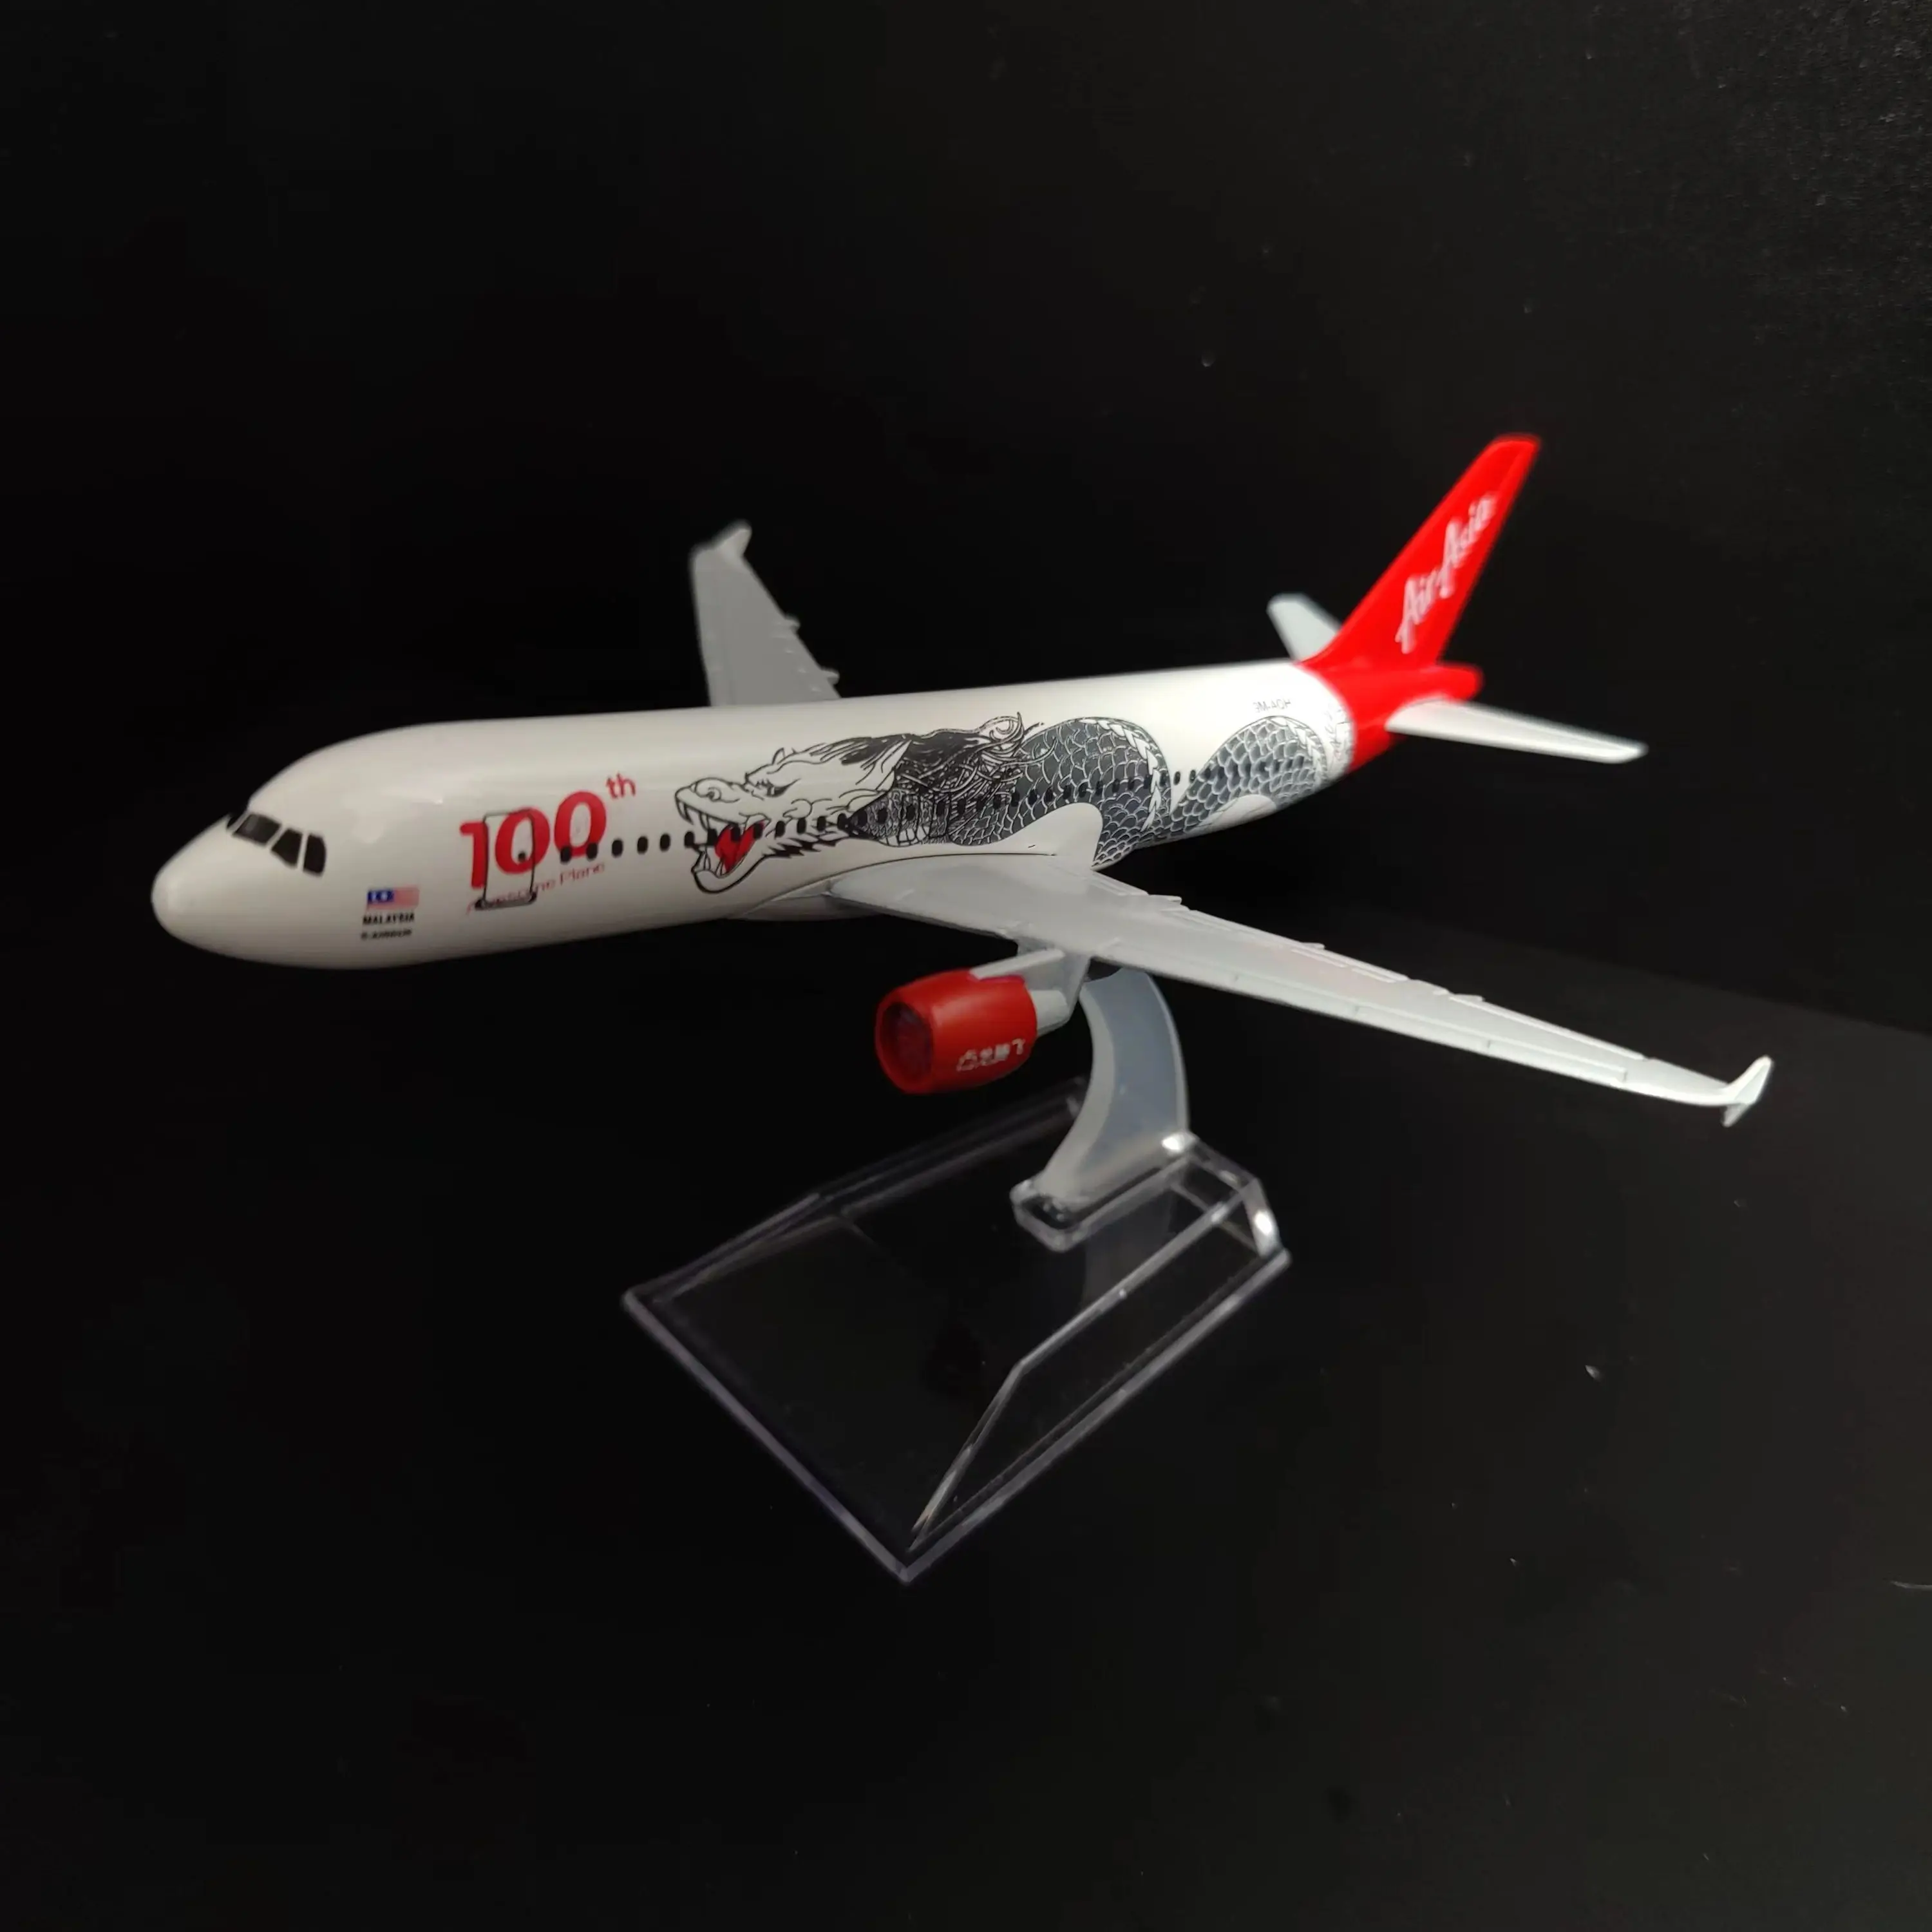 

Scale 1:400 Metal Aircraft Replica 15cm Air Asia Dragon A320 Model Airplane Miniature Xmas Kids Room Decor Gift Toys for Boys